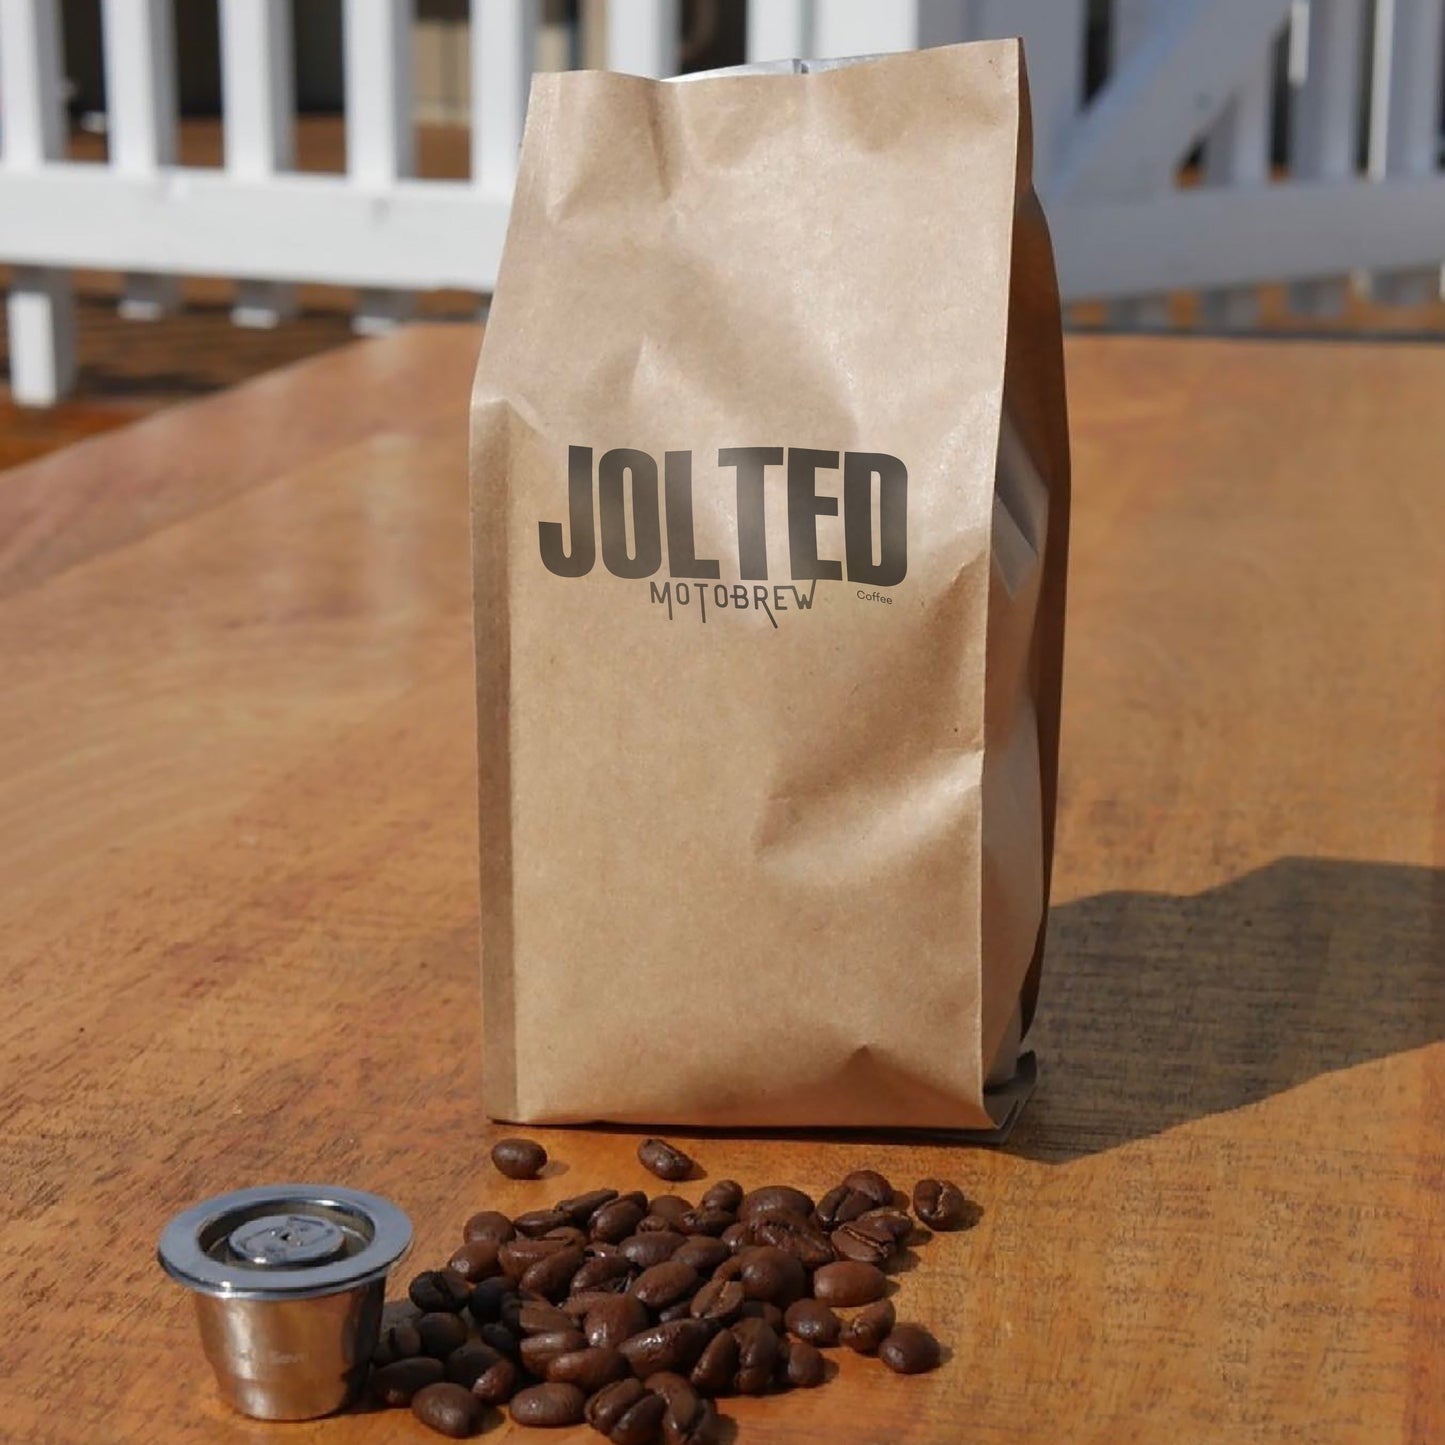 JOLTED COFFEE -MOTOBREW Sample